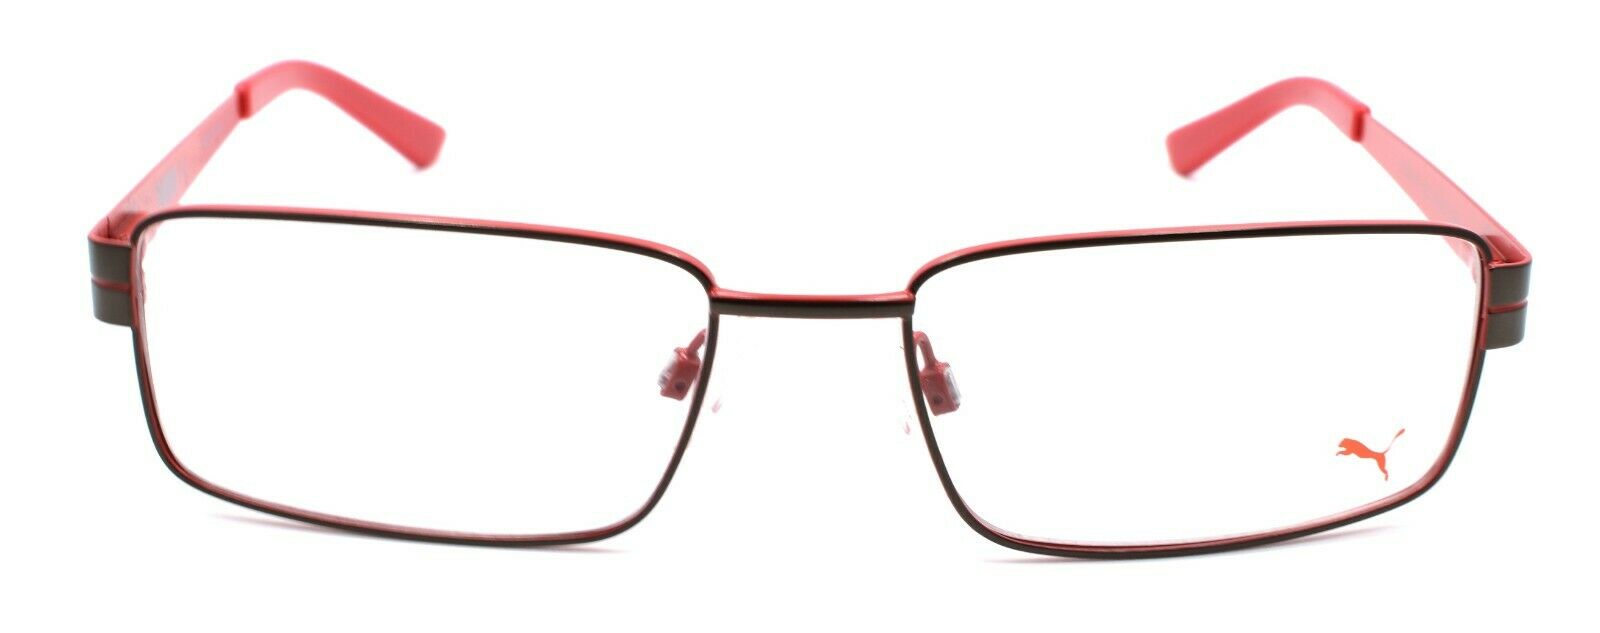 2-PUMA PE0014O 002 Men's Eyeglasses Frames 54-17-140 Ruthenium / Red-889652036540-IKSpecs